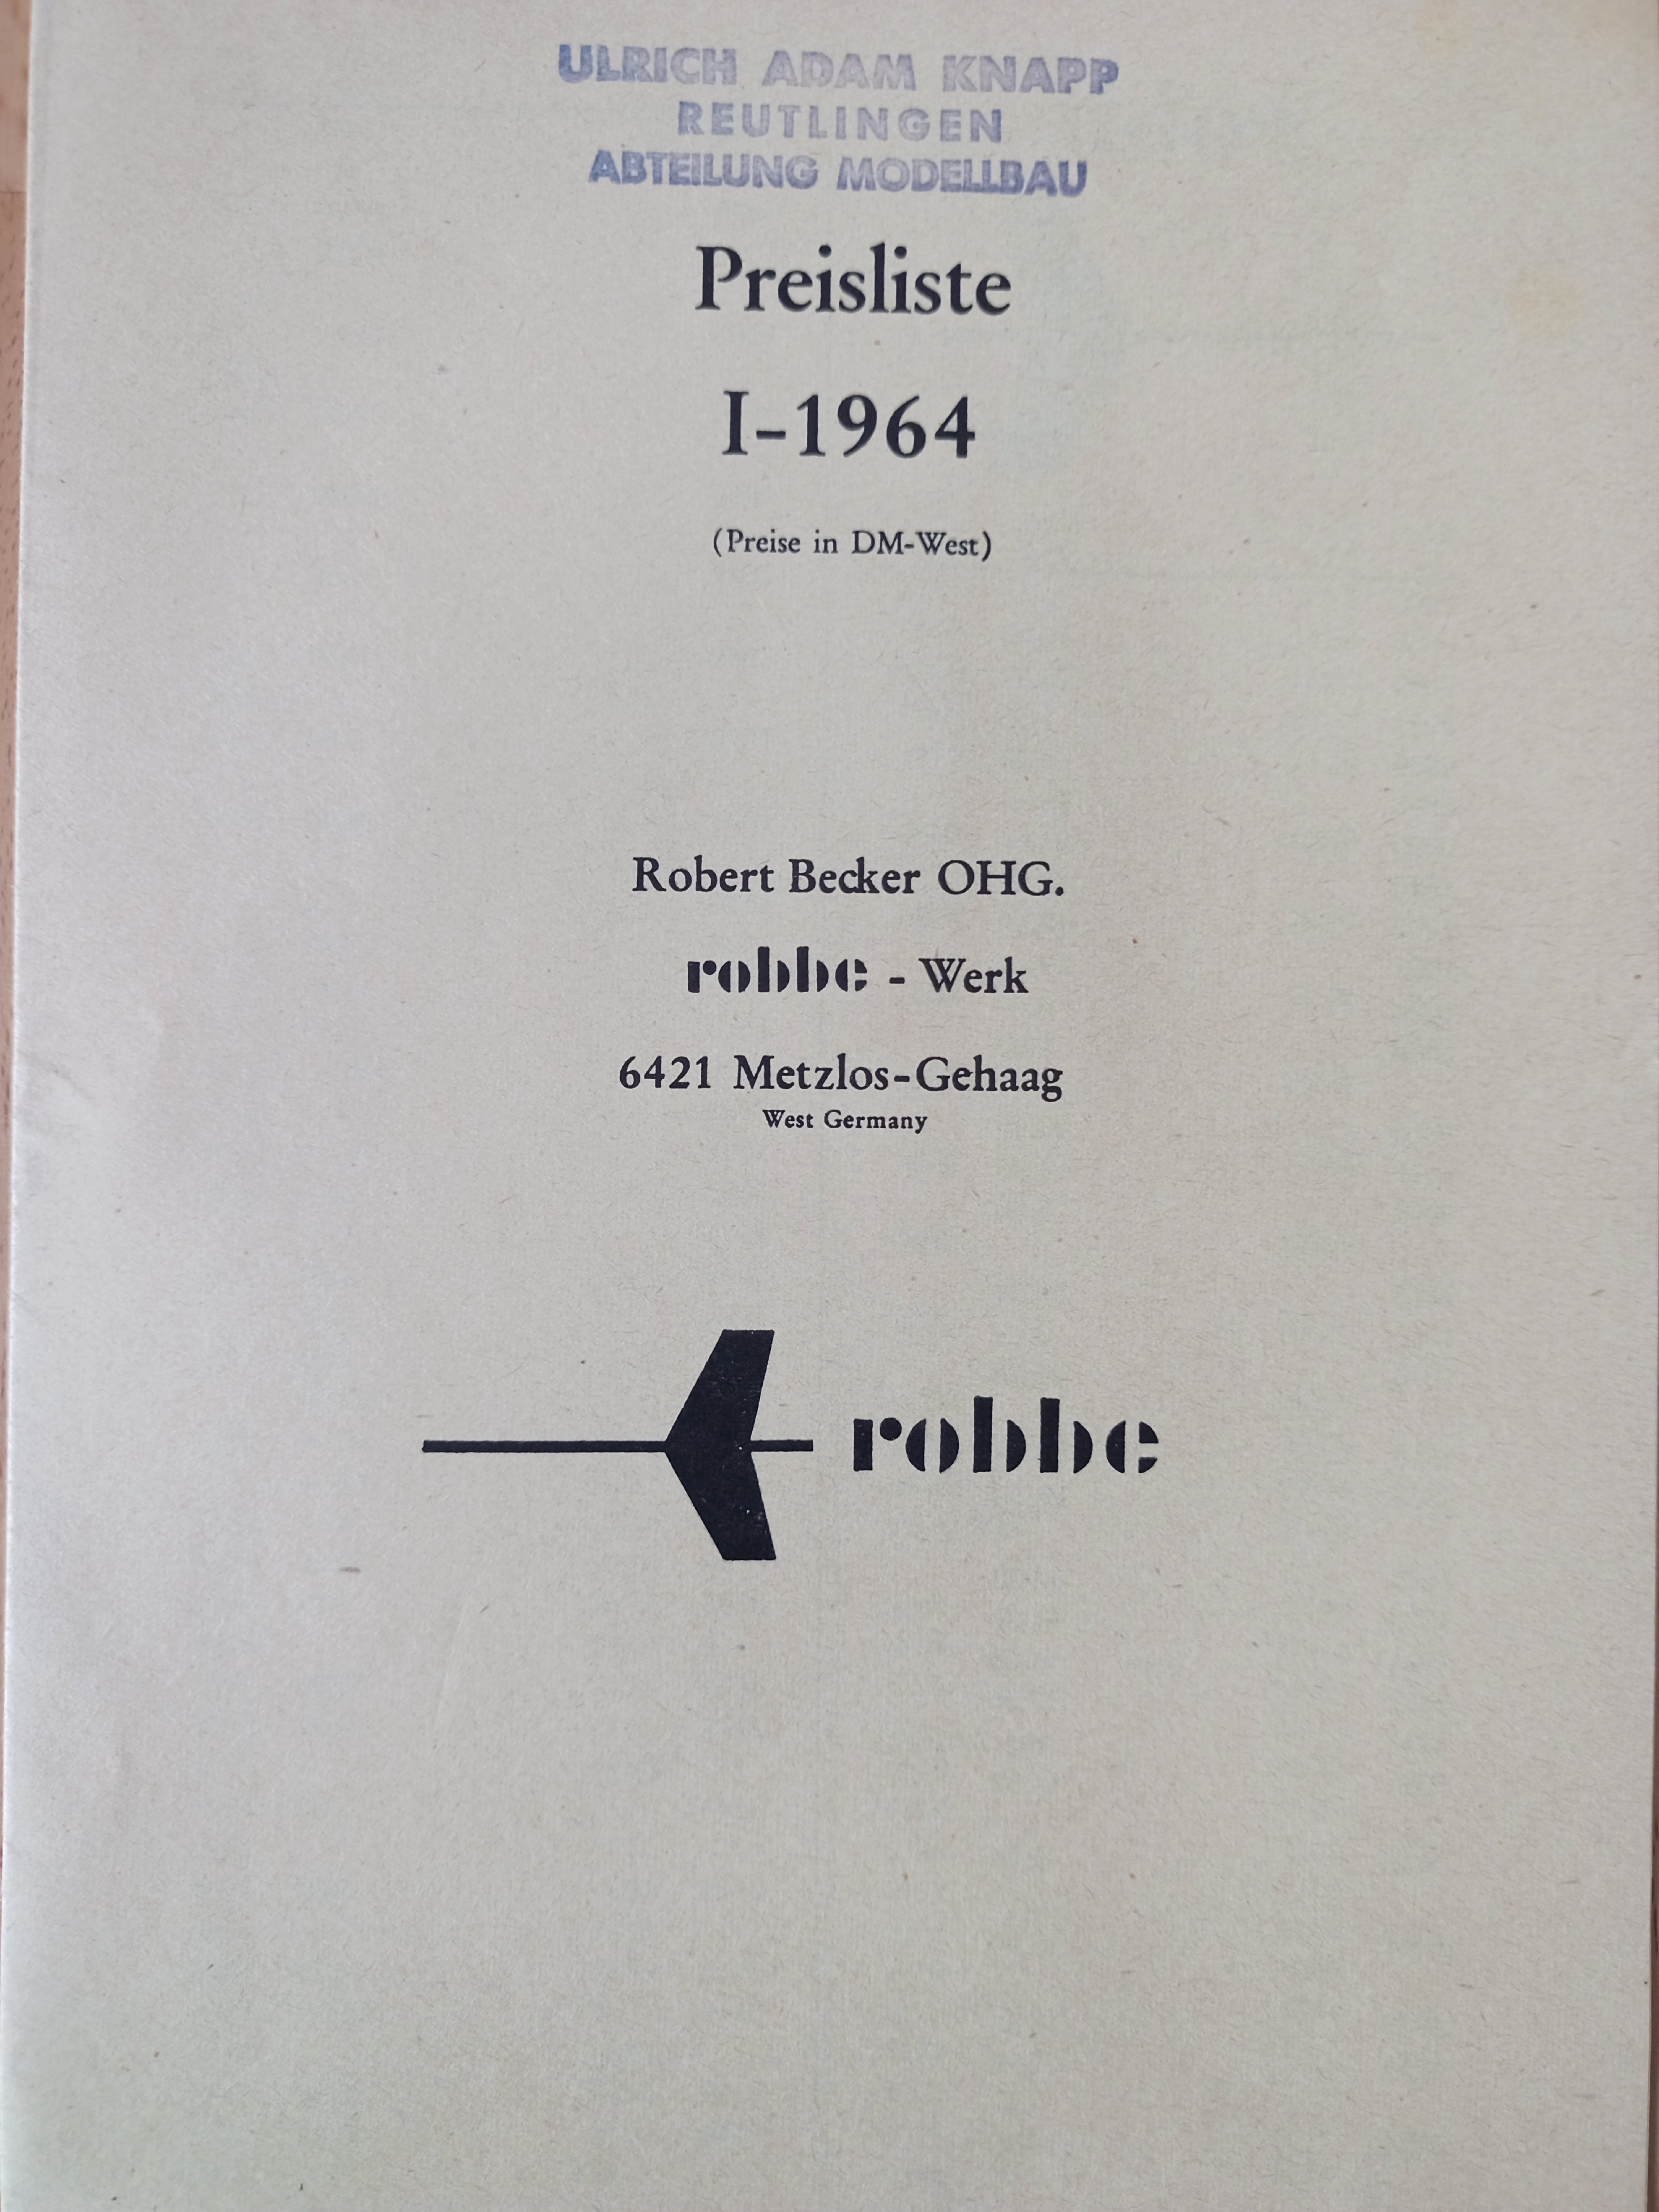 Preisliste I-1964 robbe (Deutsches Segelflugmuseum mit Modellflug CC BY-NC-SA)